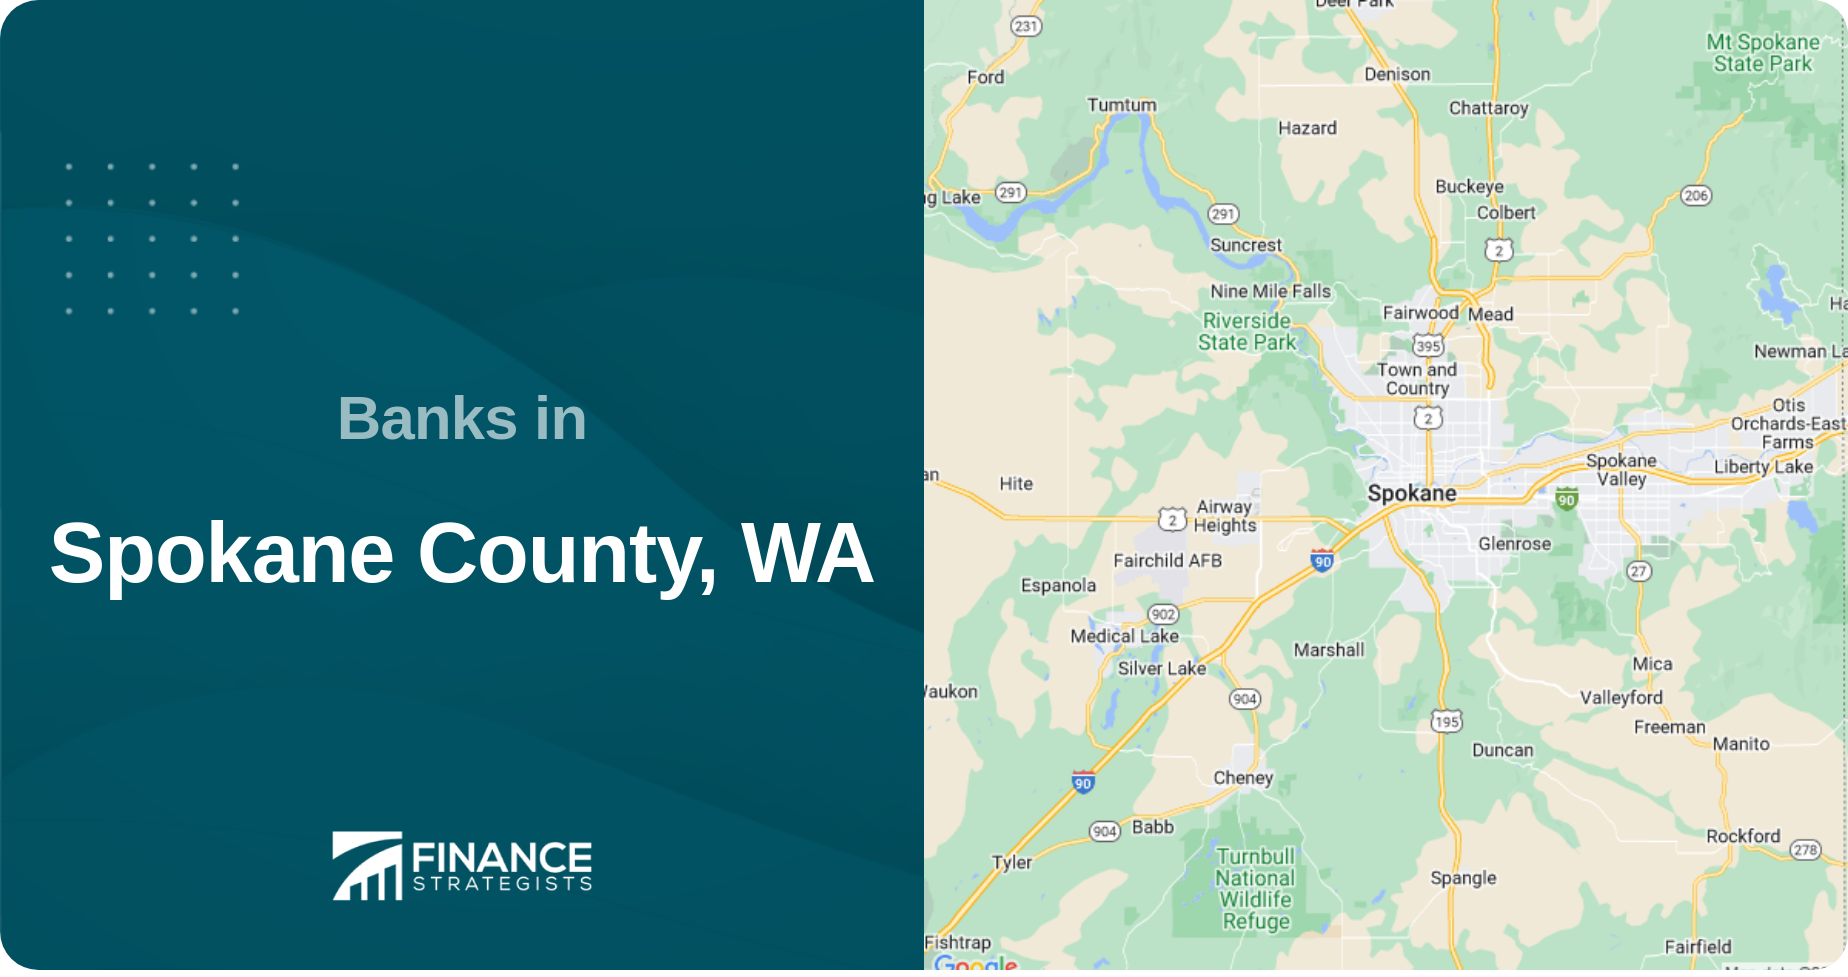 Banks in Spokane County, WA